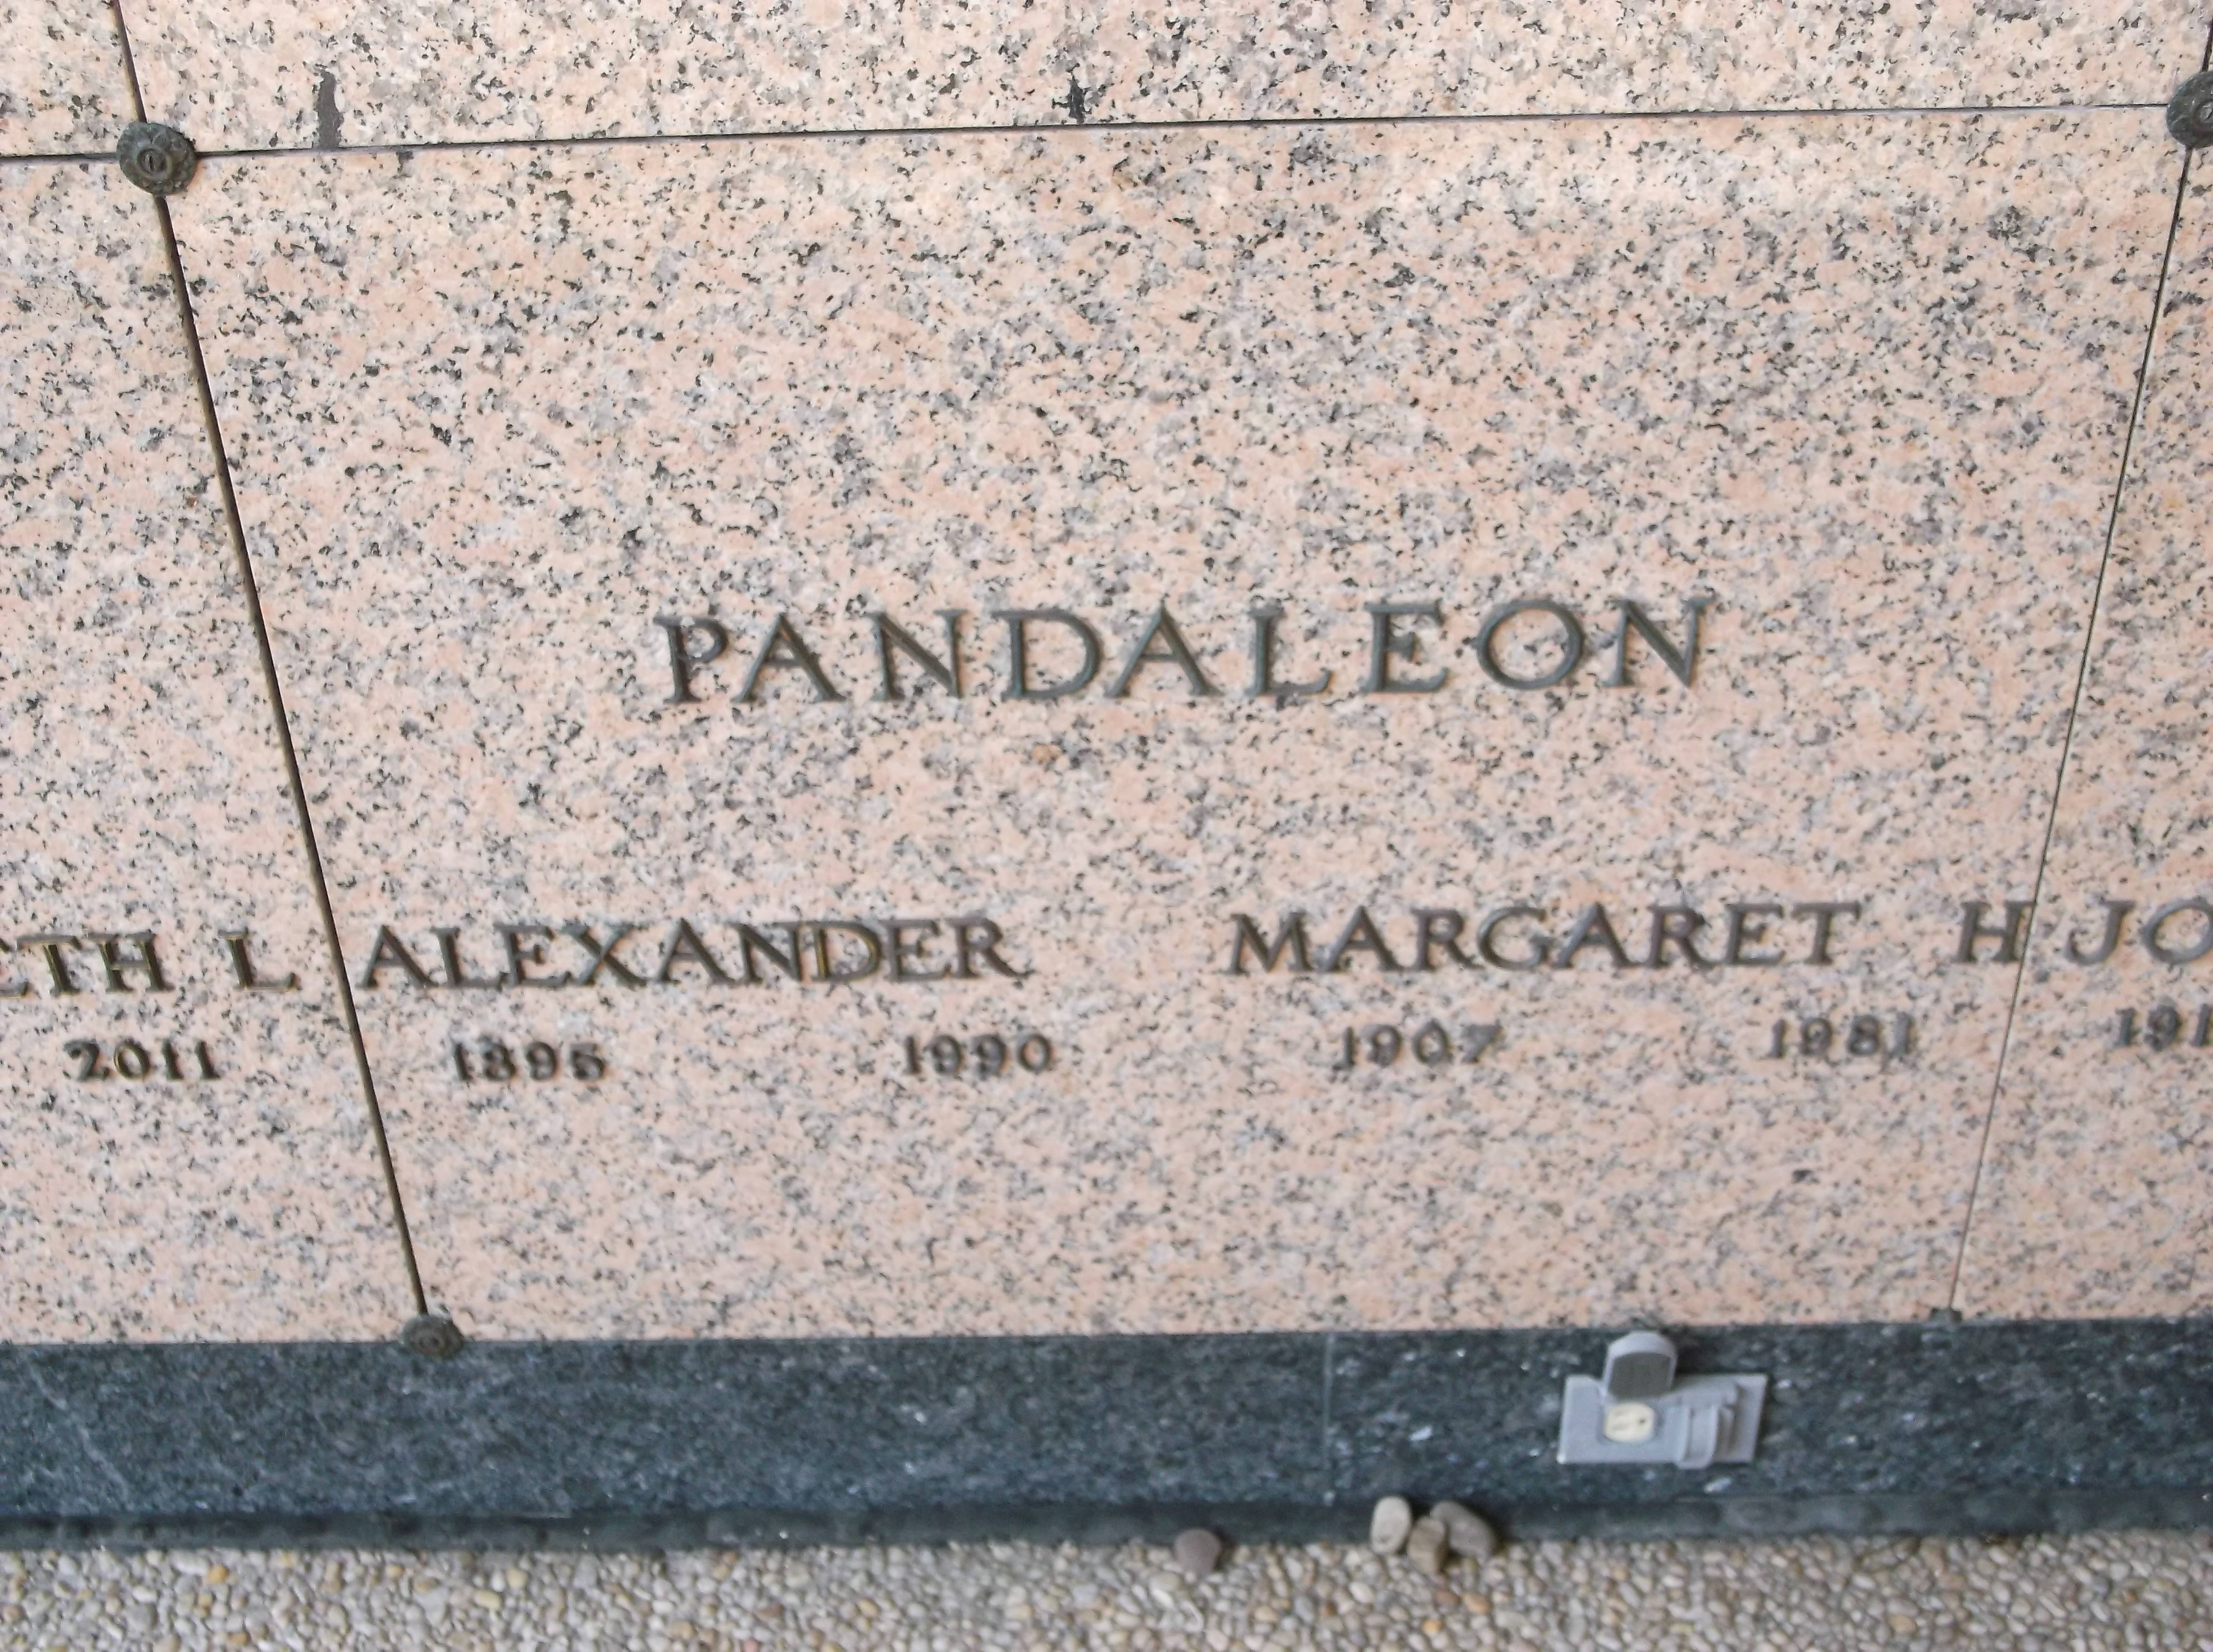 Alexander Pandaleon